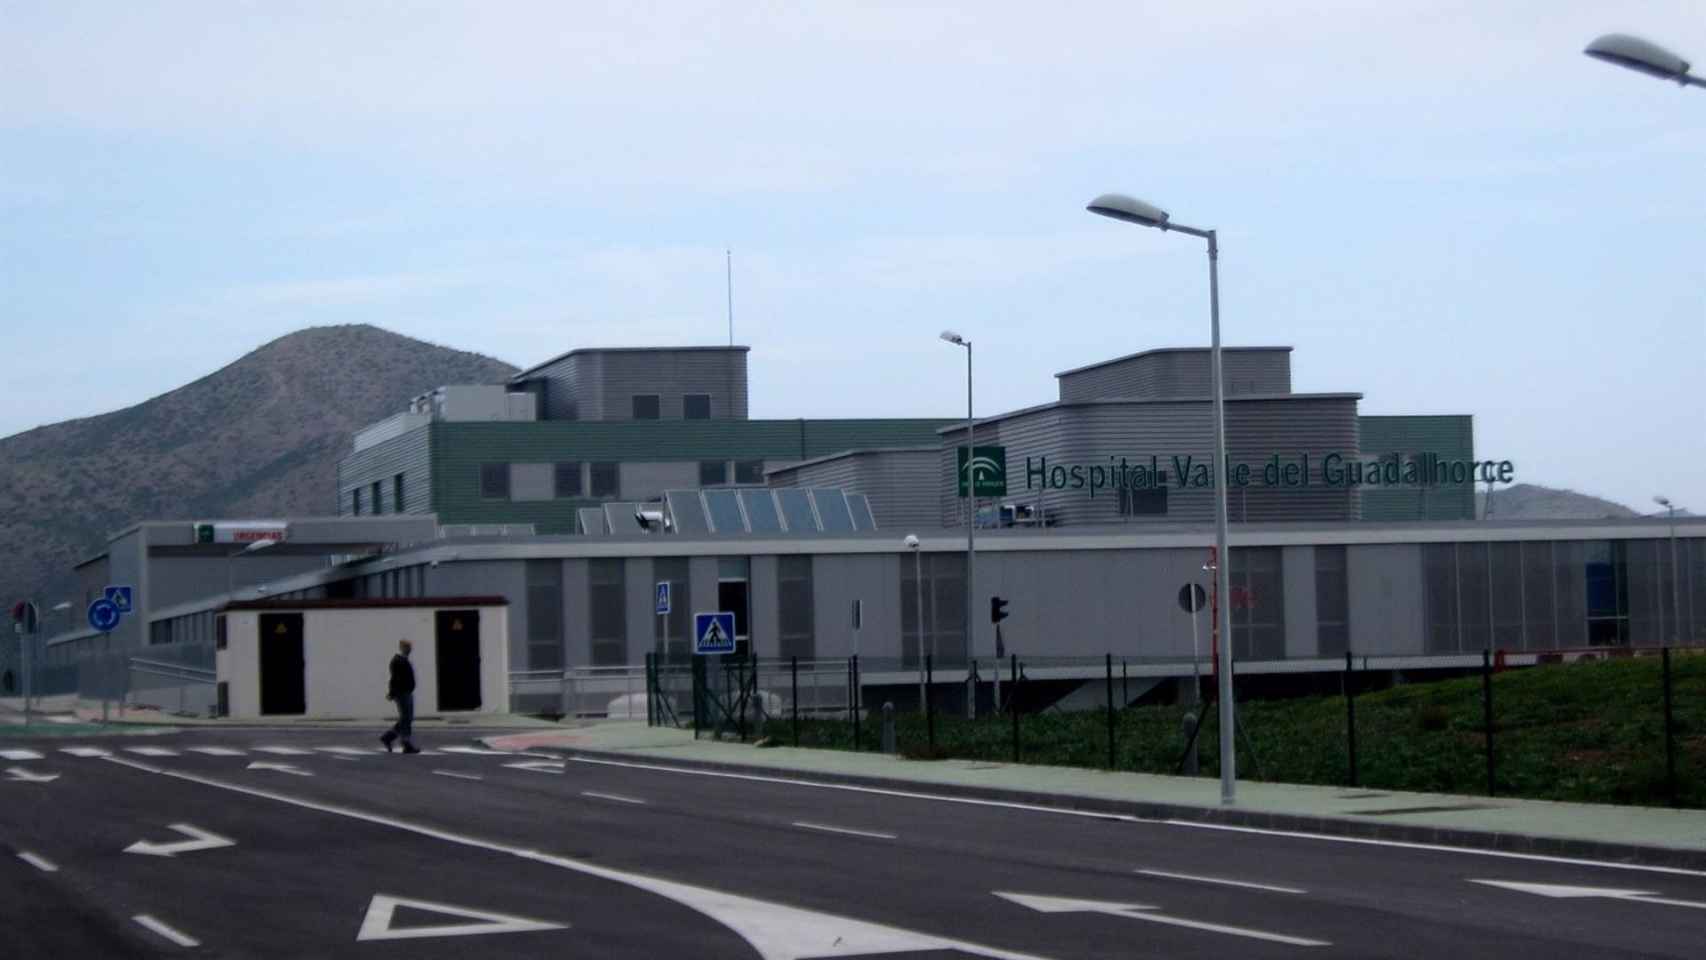 Chare del Hospital Valle del Guadalhorce.